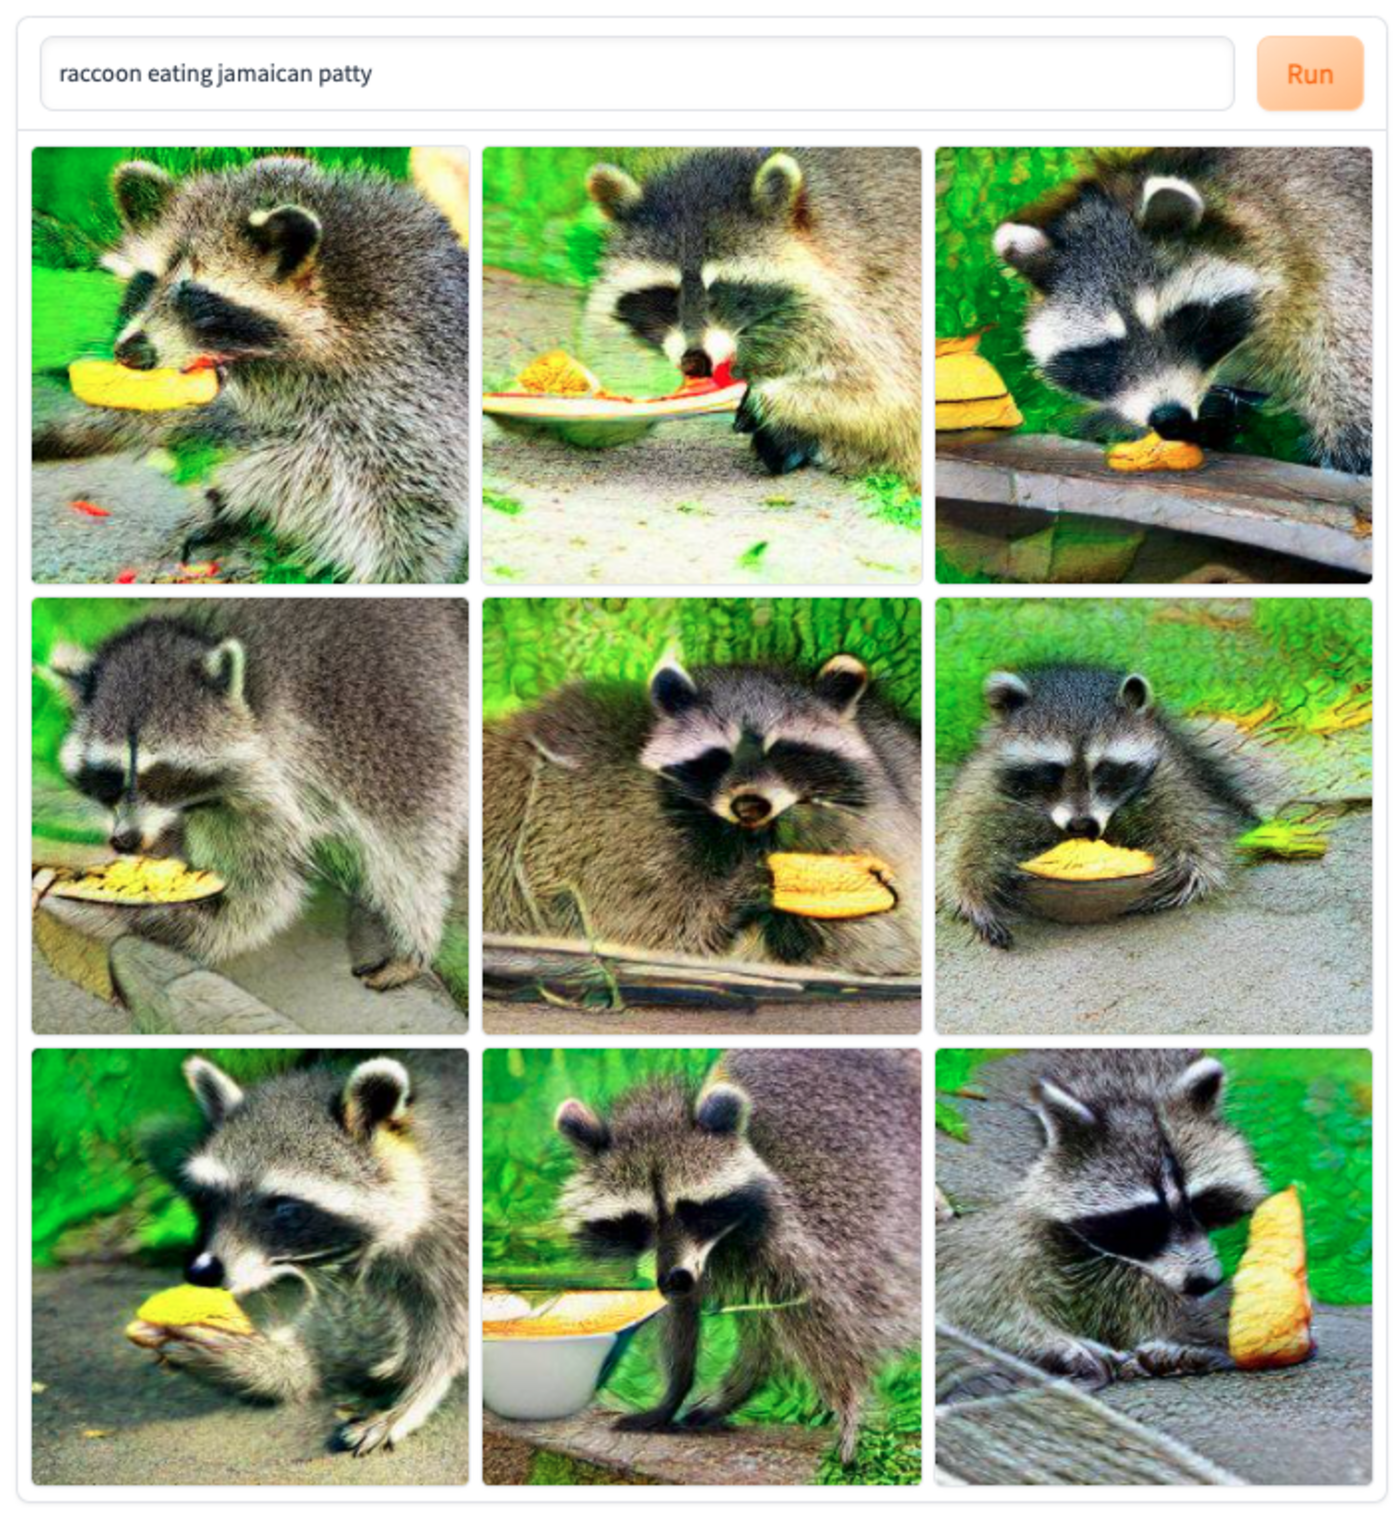 raccoons eating patty